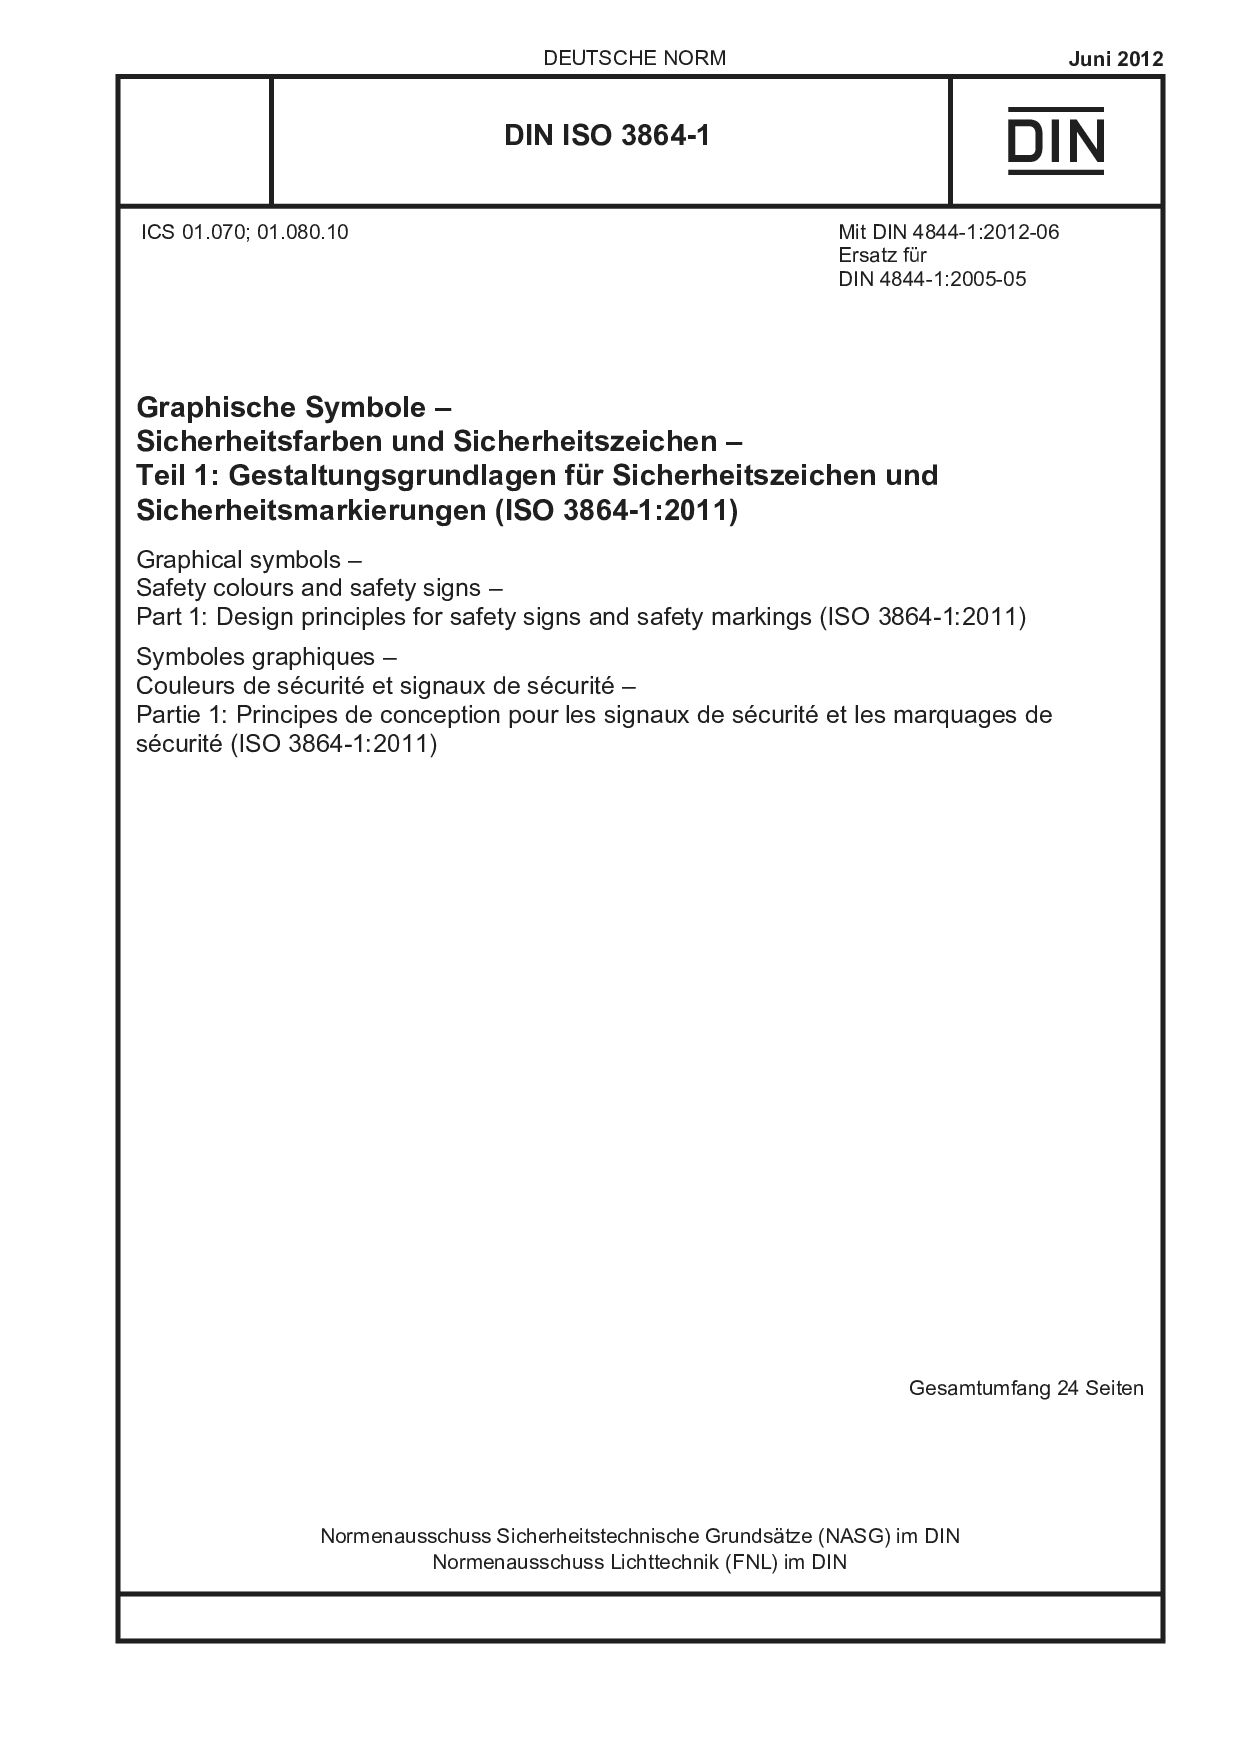 DIN ISO 3864-1:2012-06